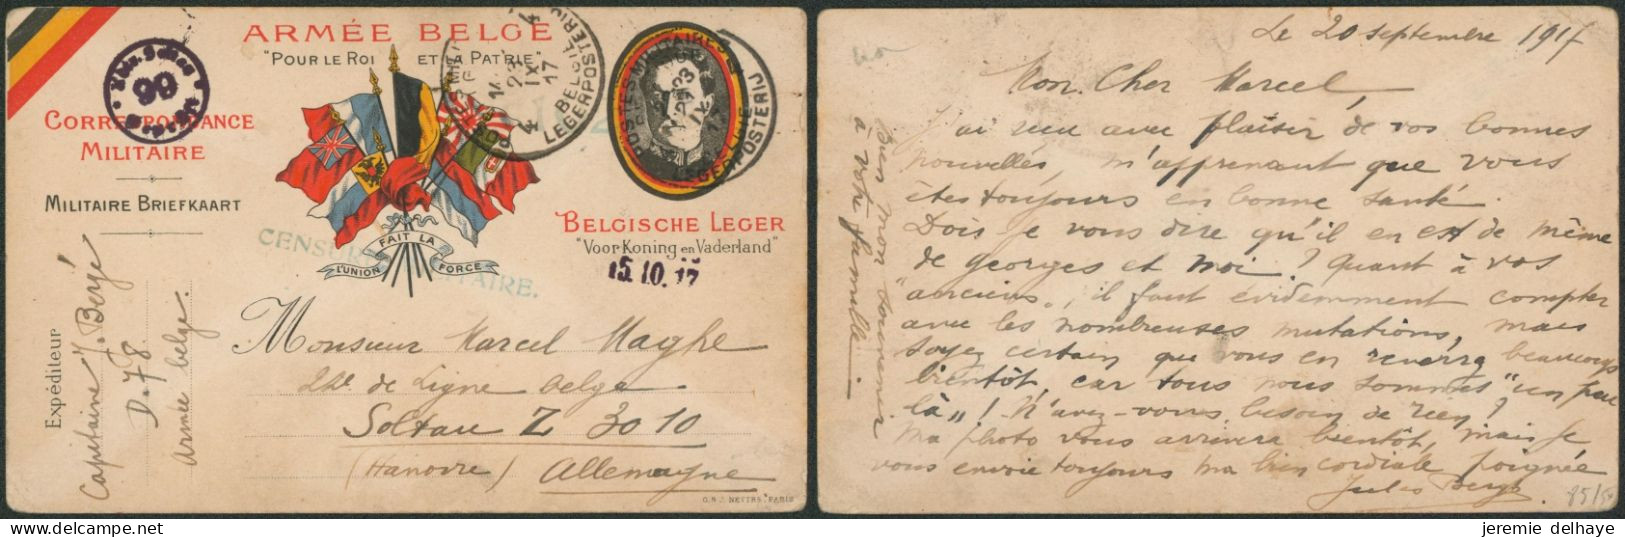 Carte Correspondance Militaire (Albert) Expédié Via P.M.B. 4 (1917) + Censure Verte > Prisonnier Belge à Soltau. - Belgische Armee